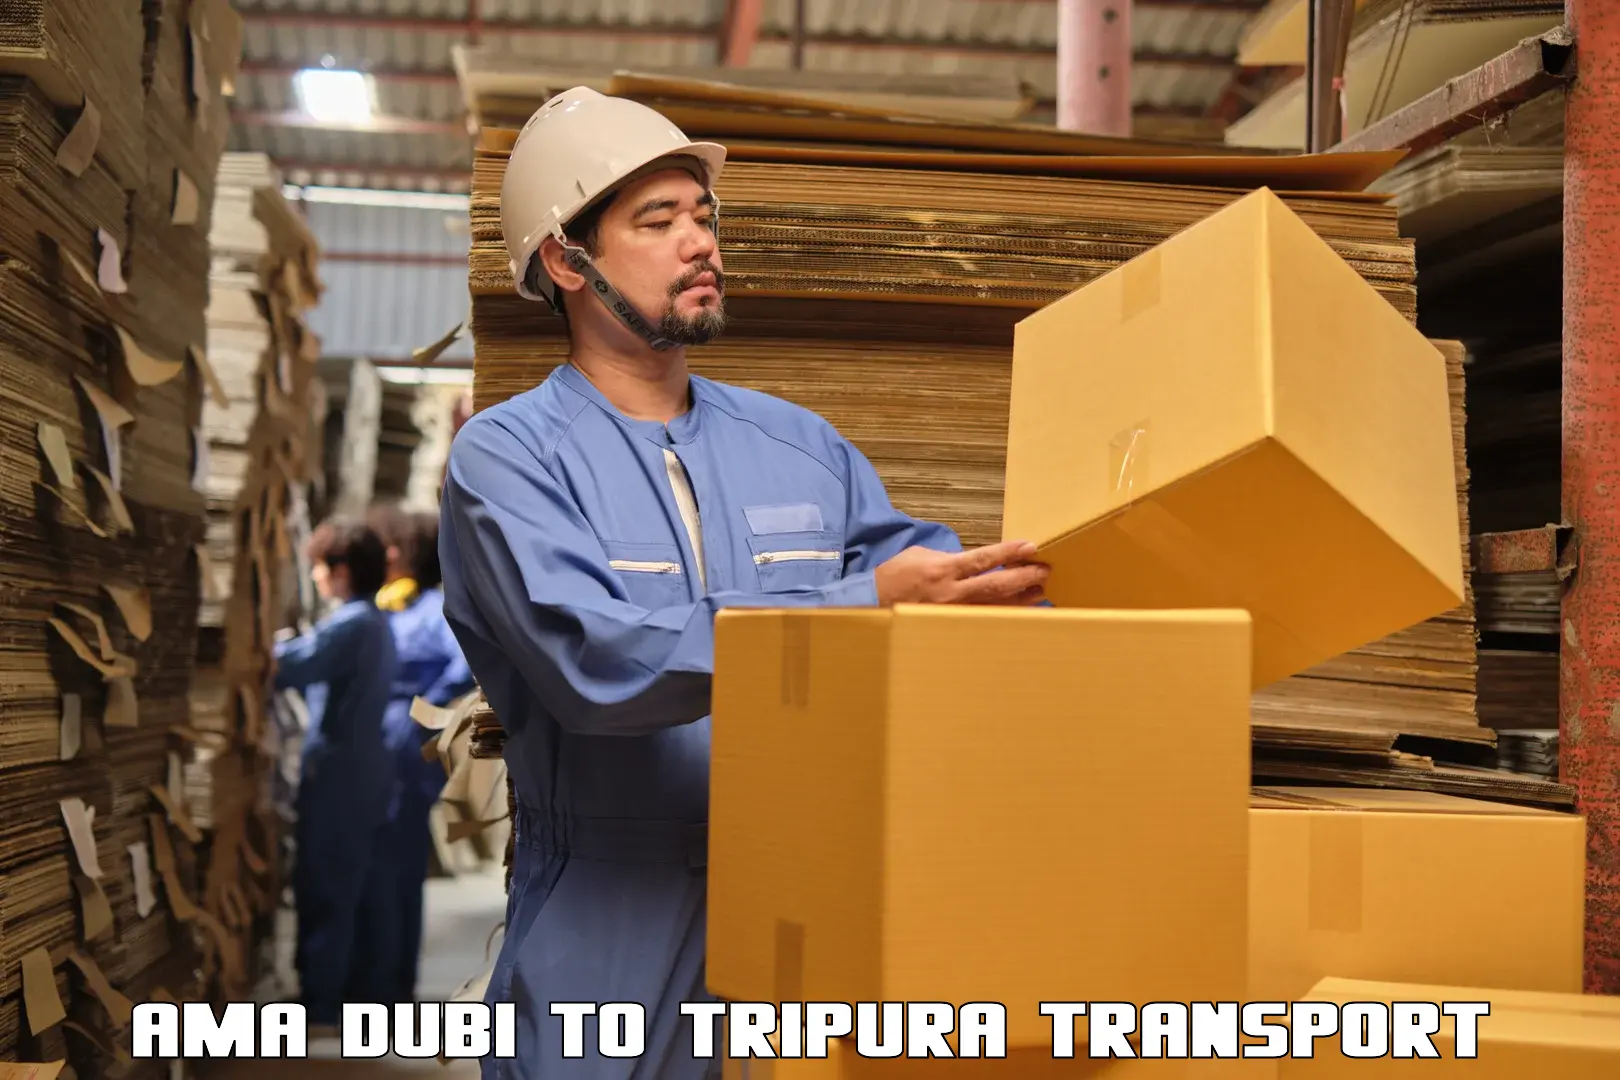 Shipping partner in Ama Dubi to Udaipur Tripura